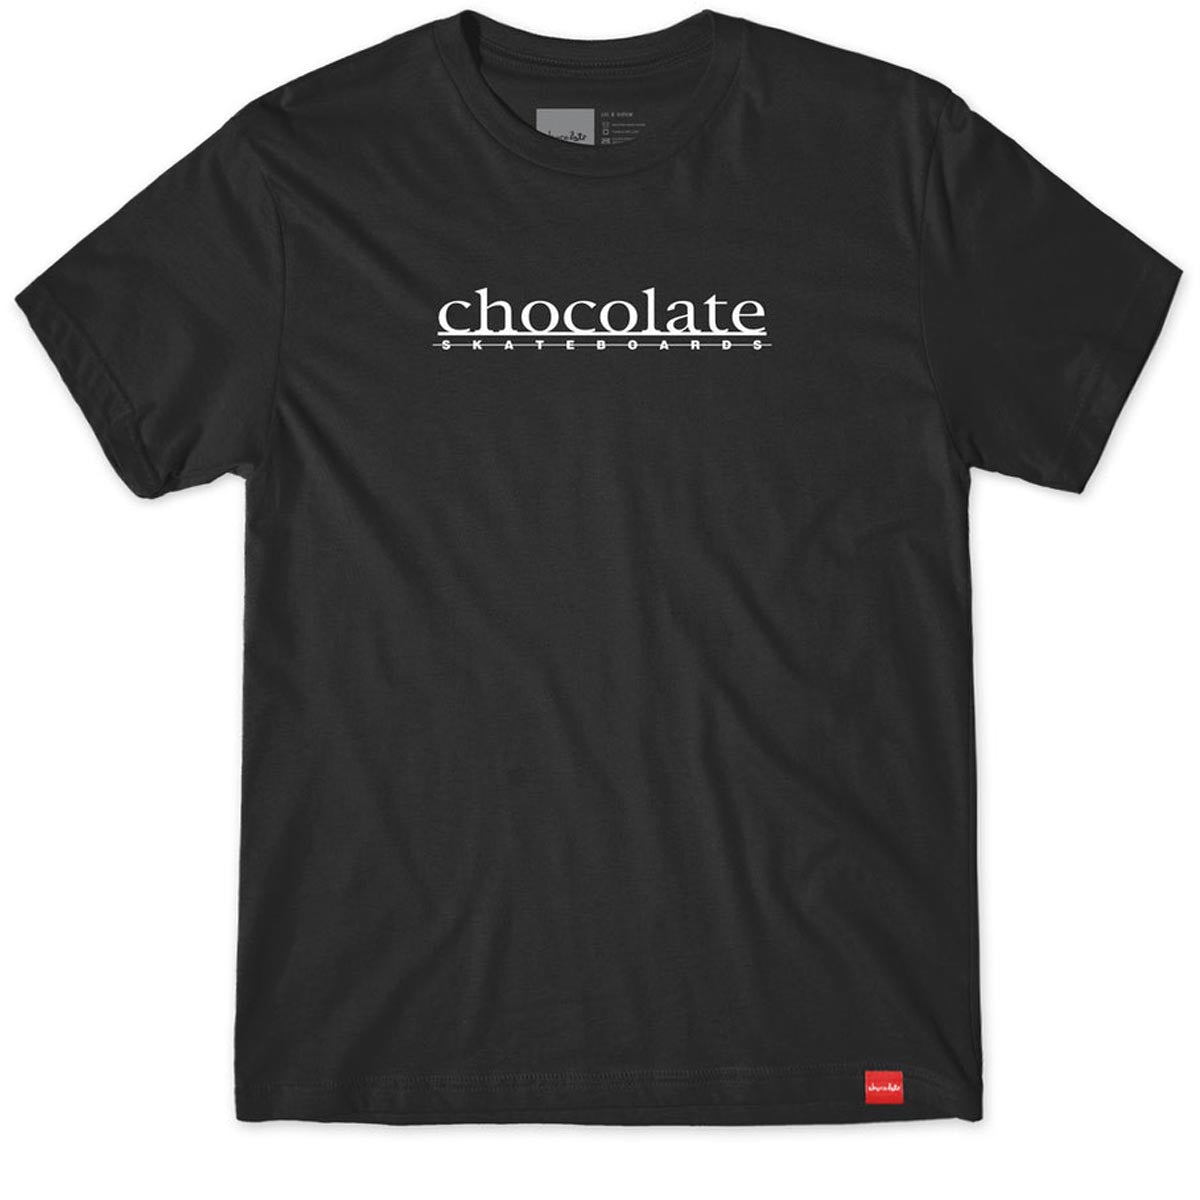 Chocolate Company T-Shirt - Black image 1